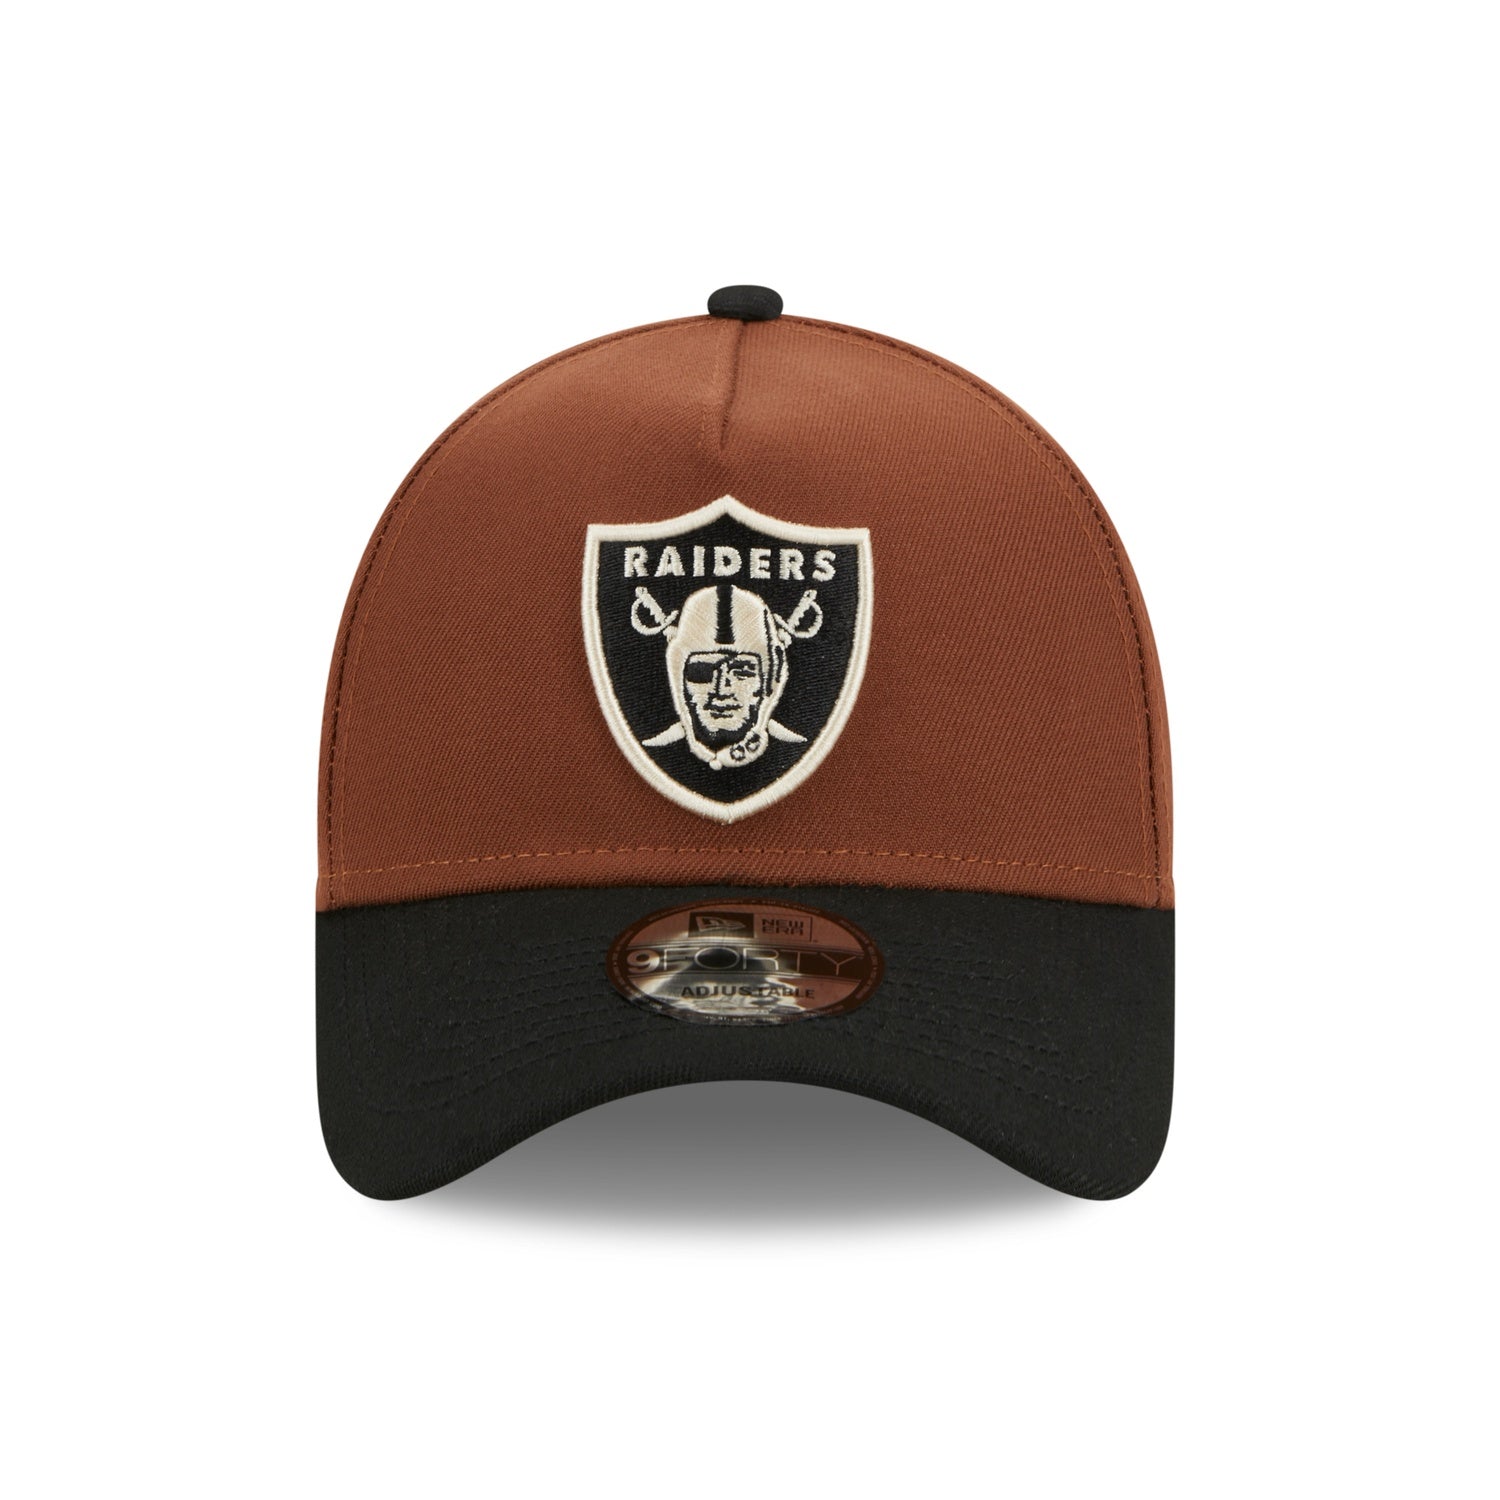 NEW ERA 59FIFTY NFL LAS VEGAS RAIDERS SUPER BOWL XVIII TWO TONE / PINK UV  FITTED CAP